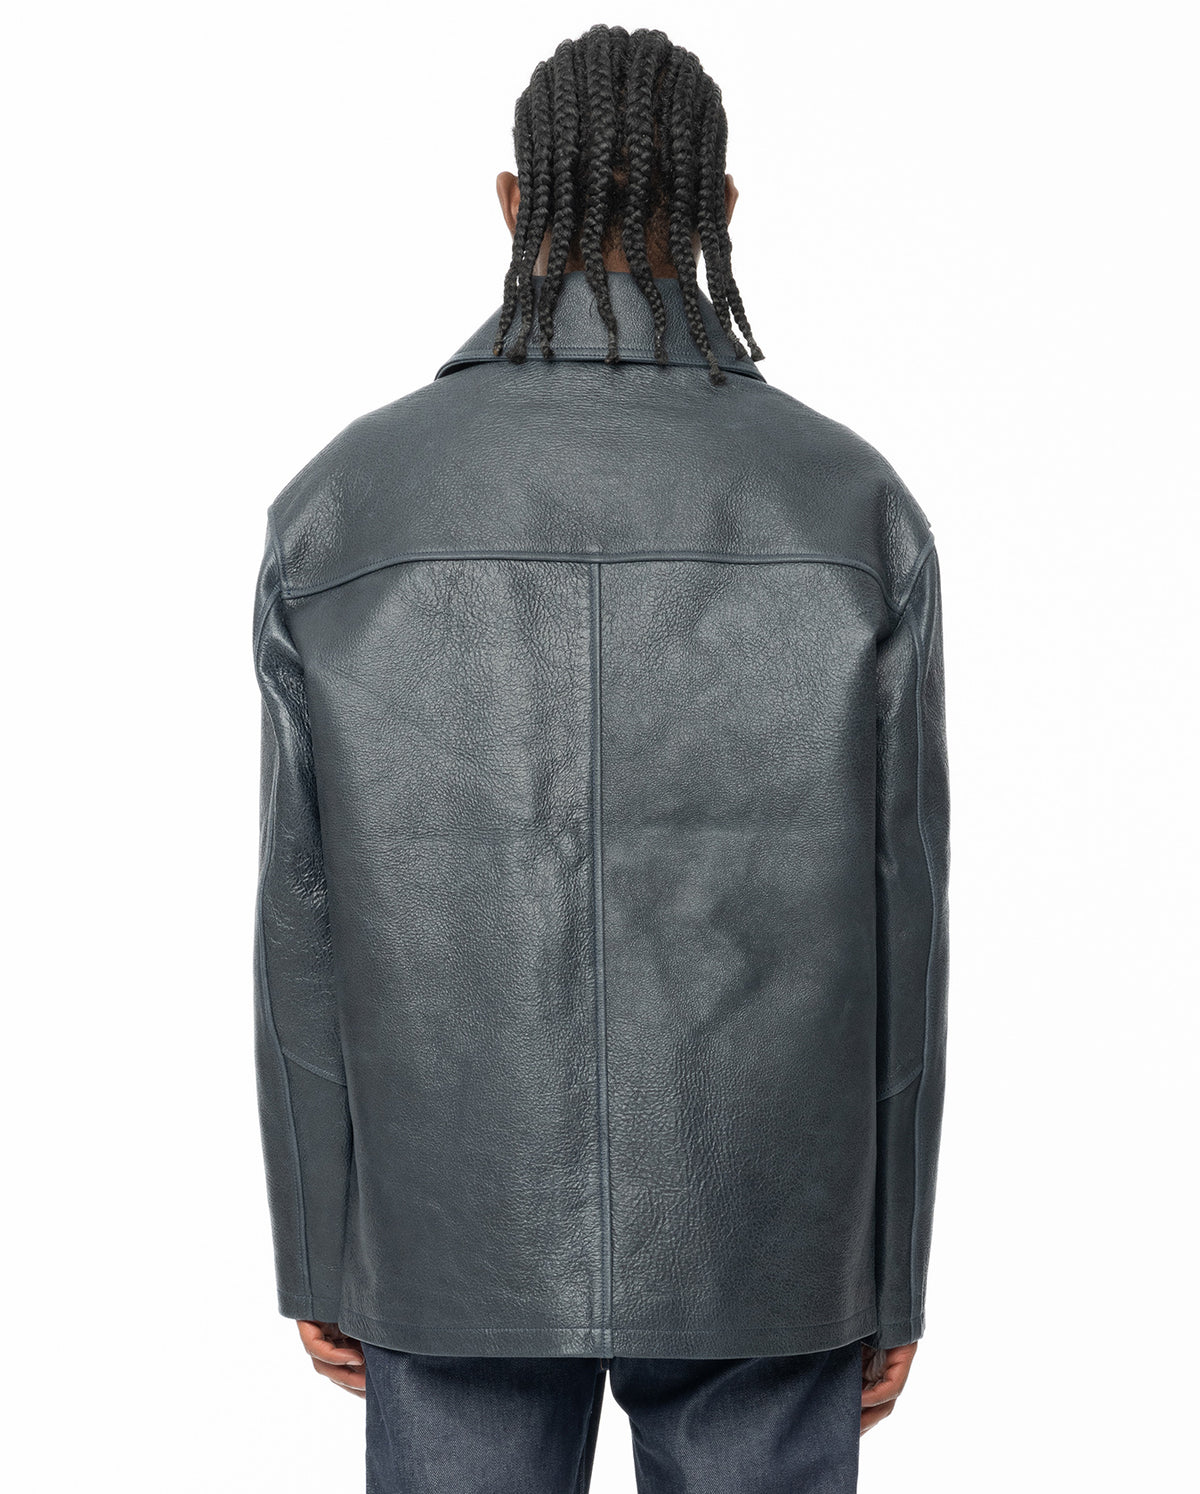 Wilkie Leather Jacket